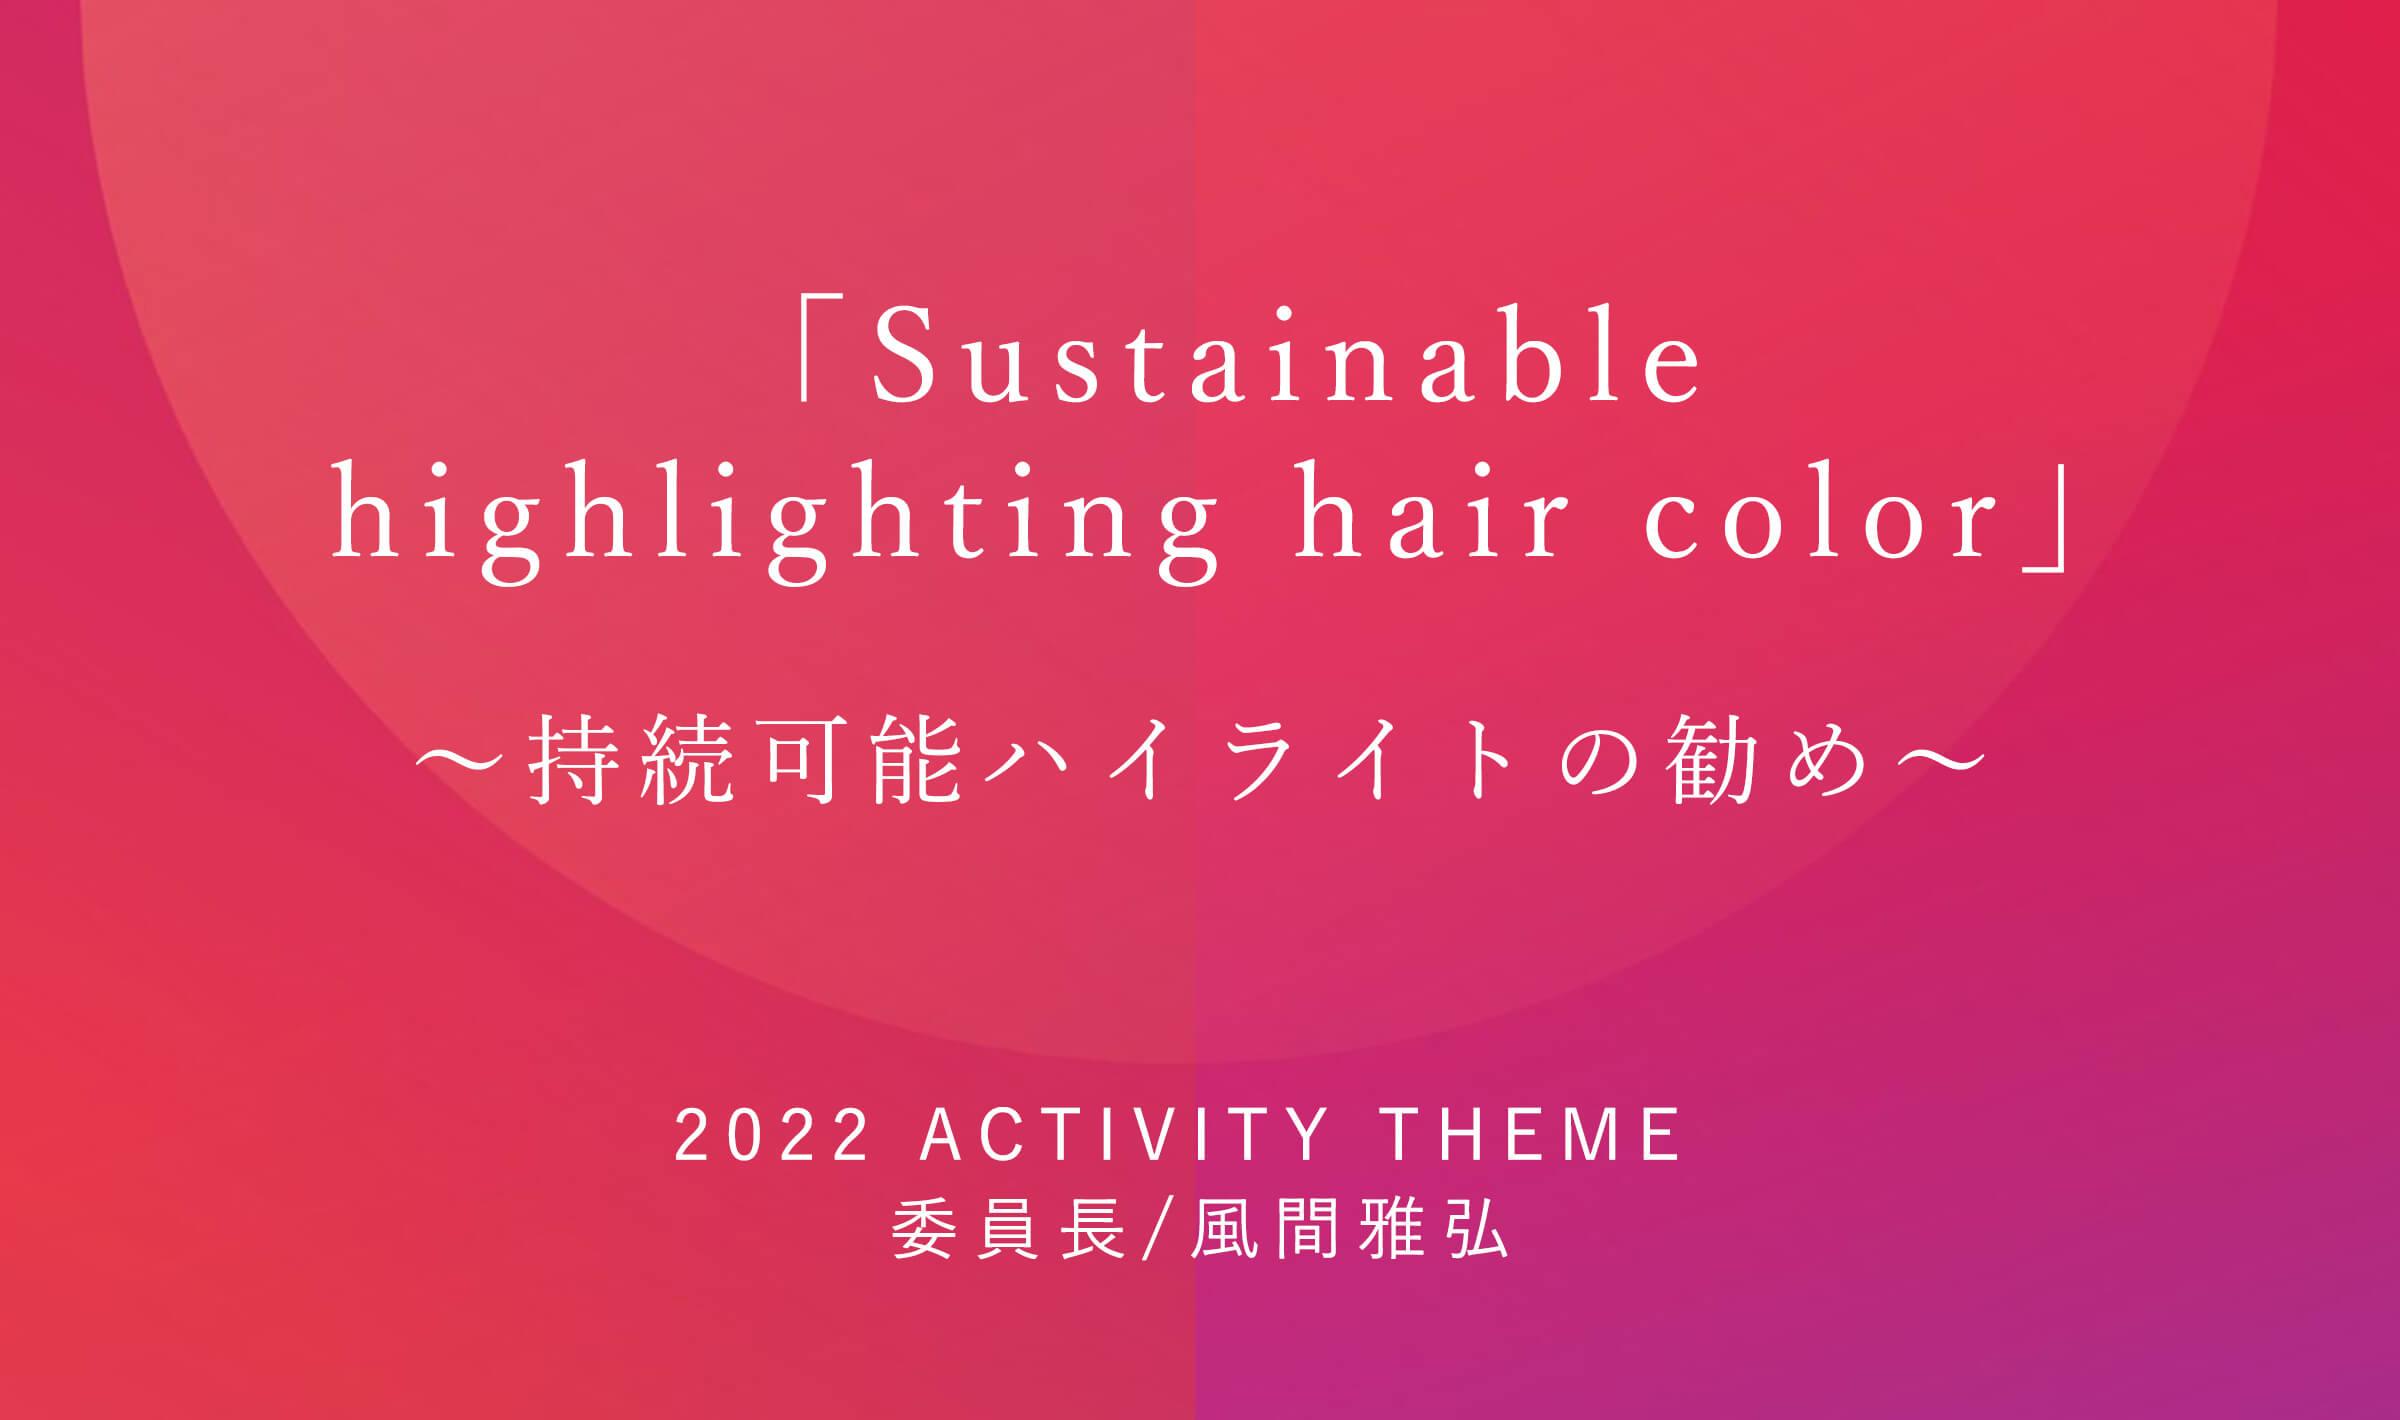 「Sustainable highlighting hair color」〜持続可能ハイライトの勧め〜　2022 JHCA 活動テーマ 委員長/風間雅弘